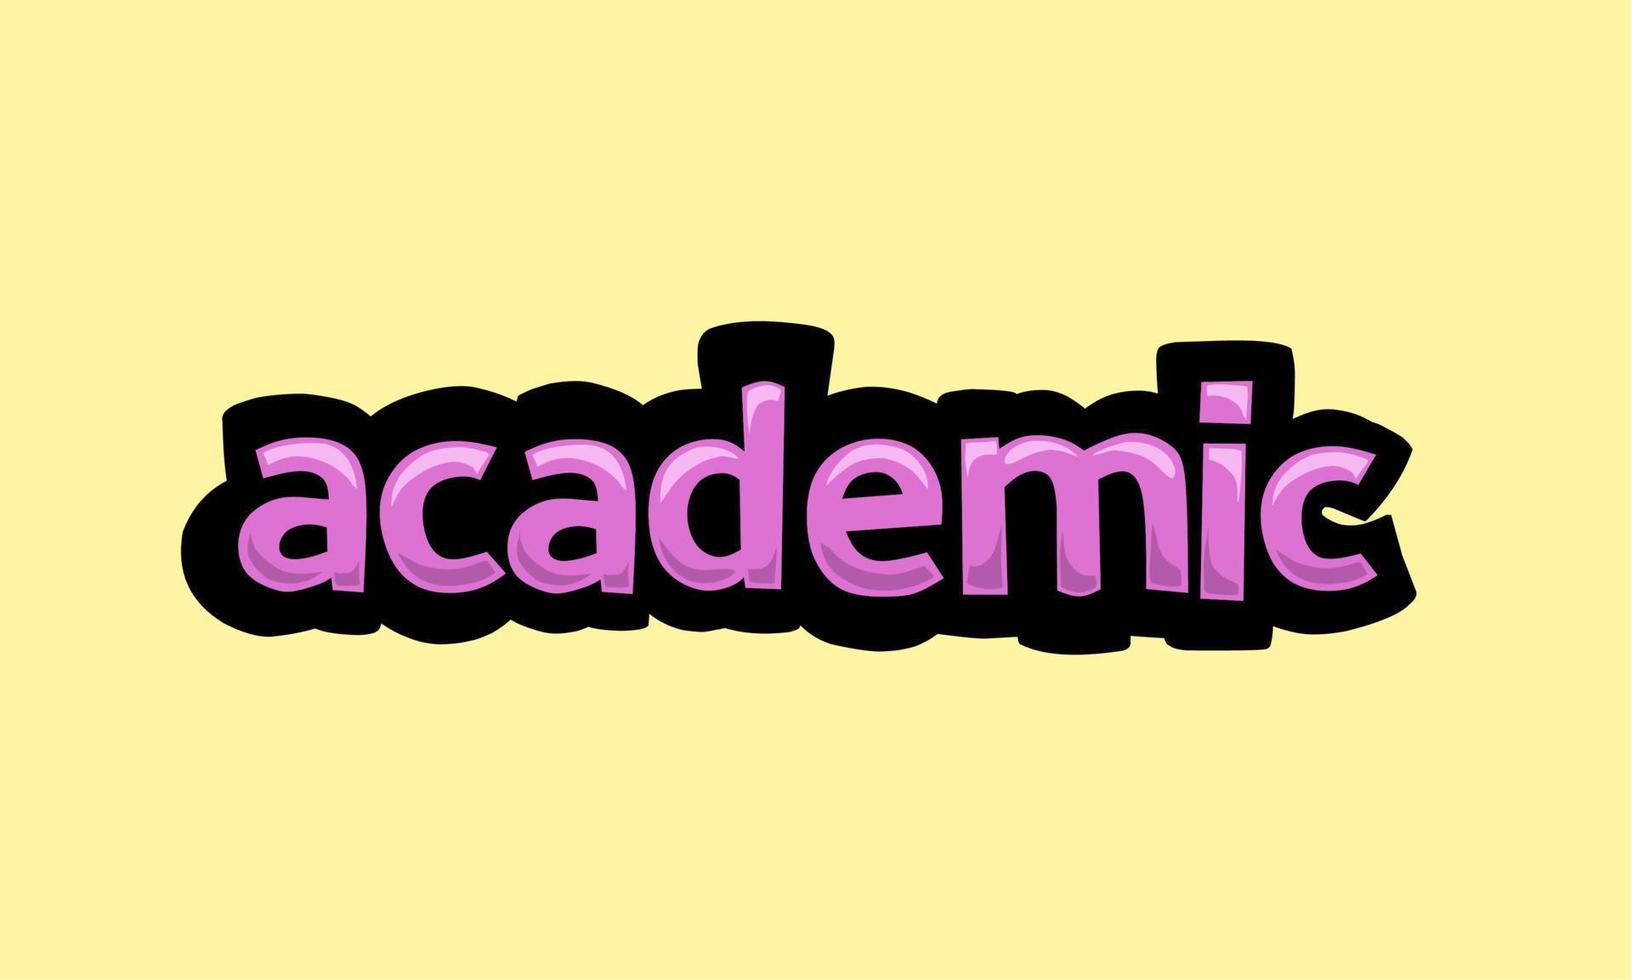 diseño de vector de escritura académica sobre un fondo amarillo